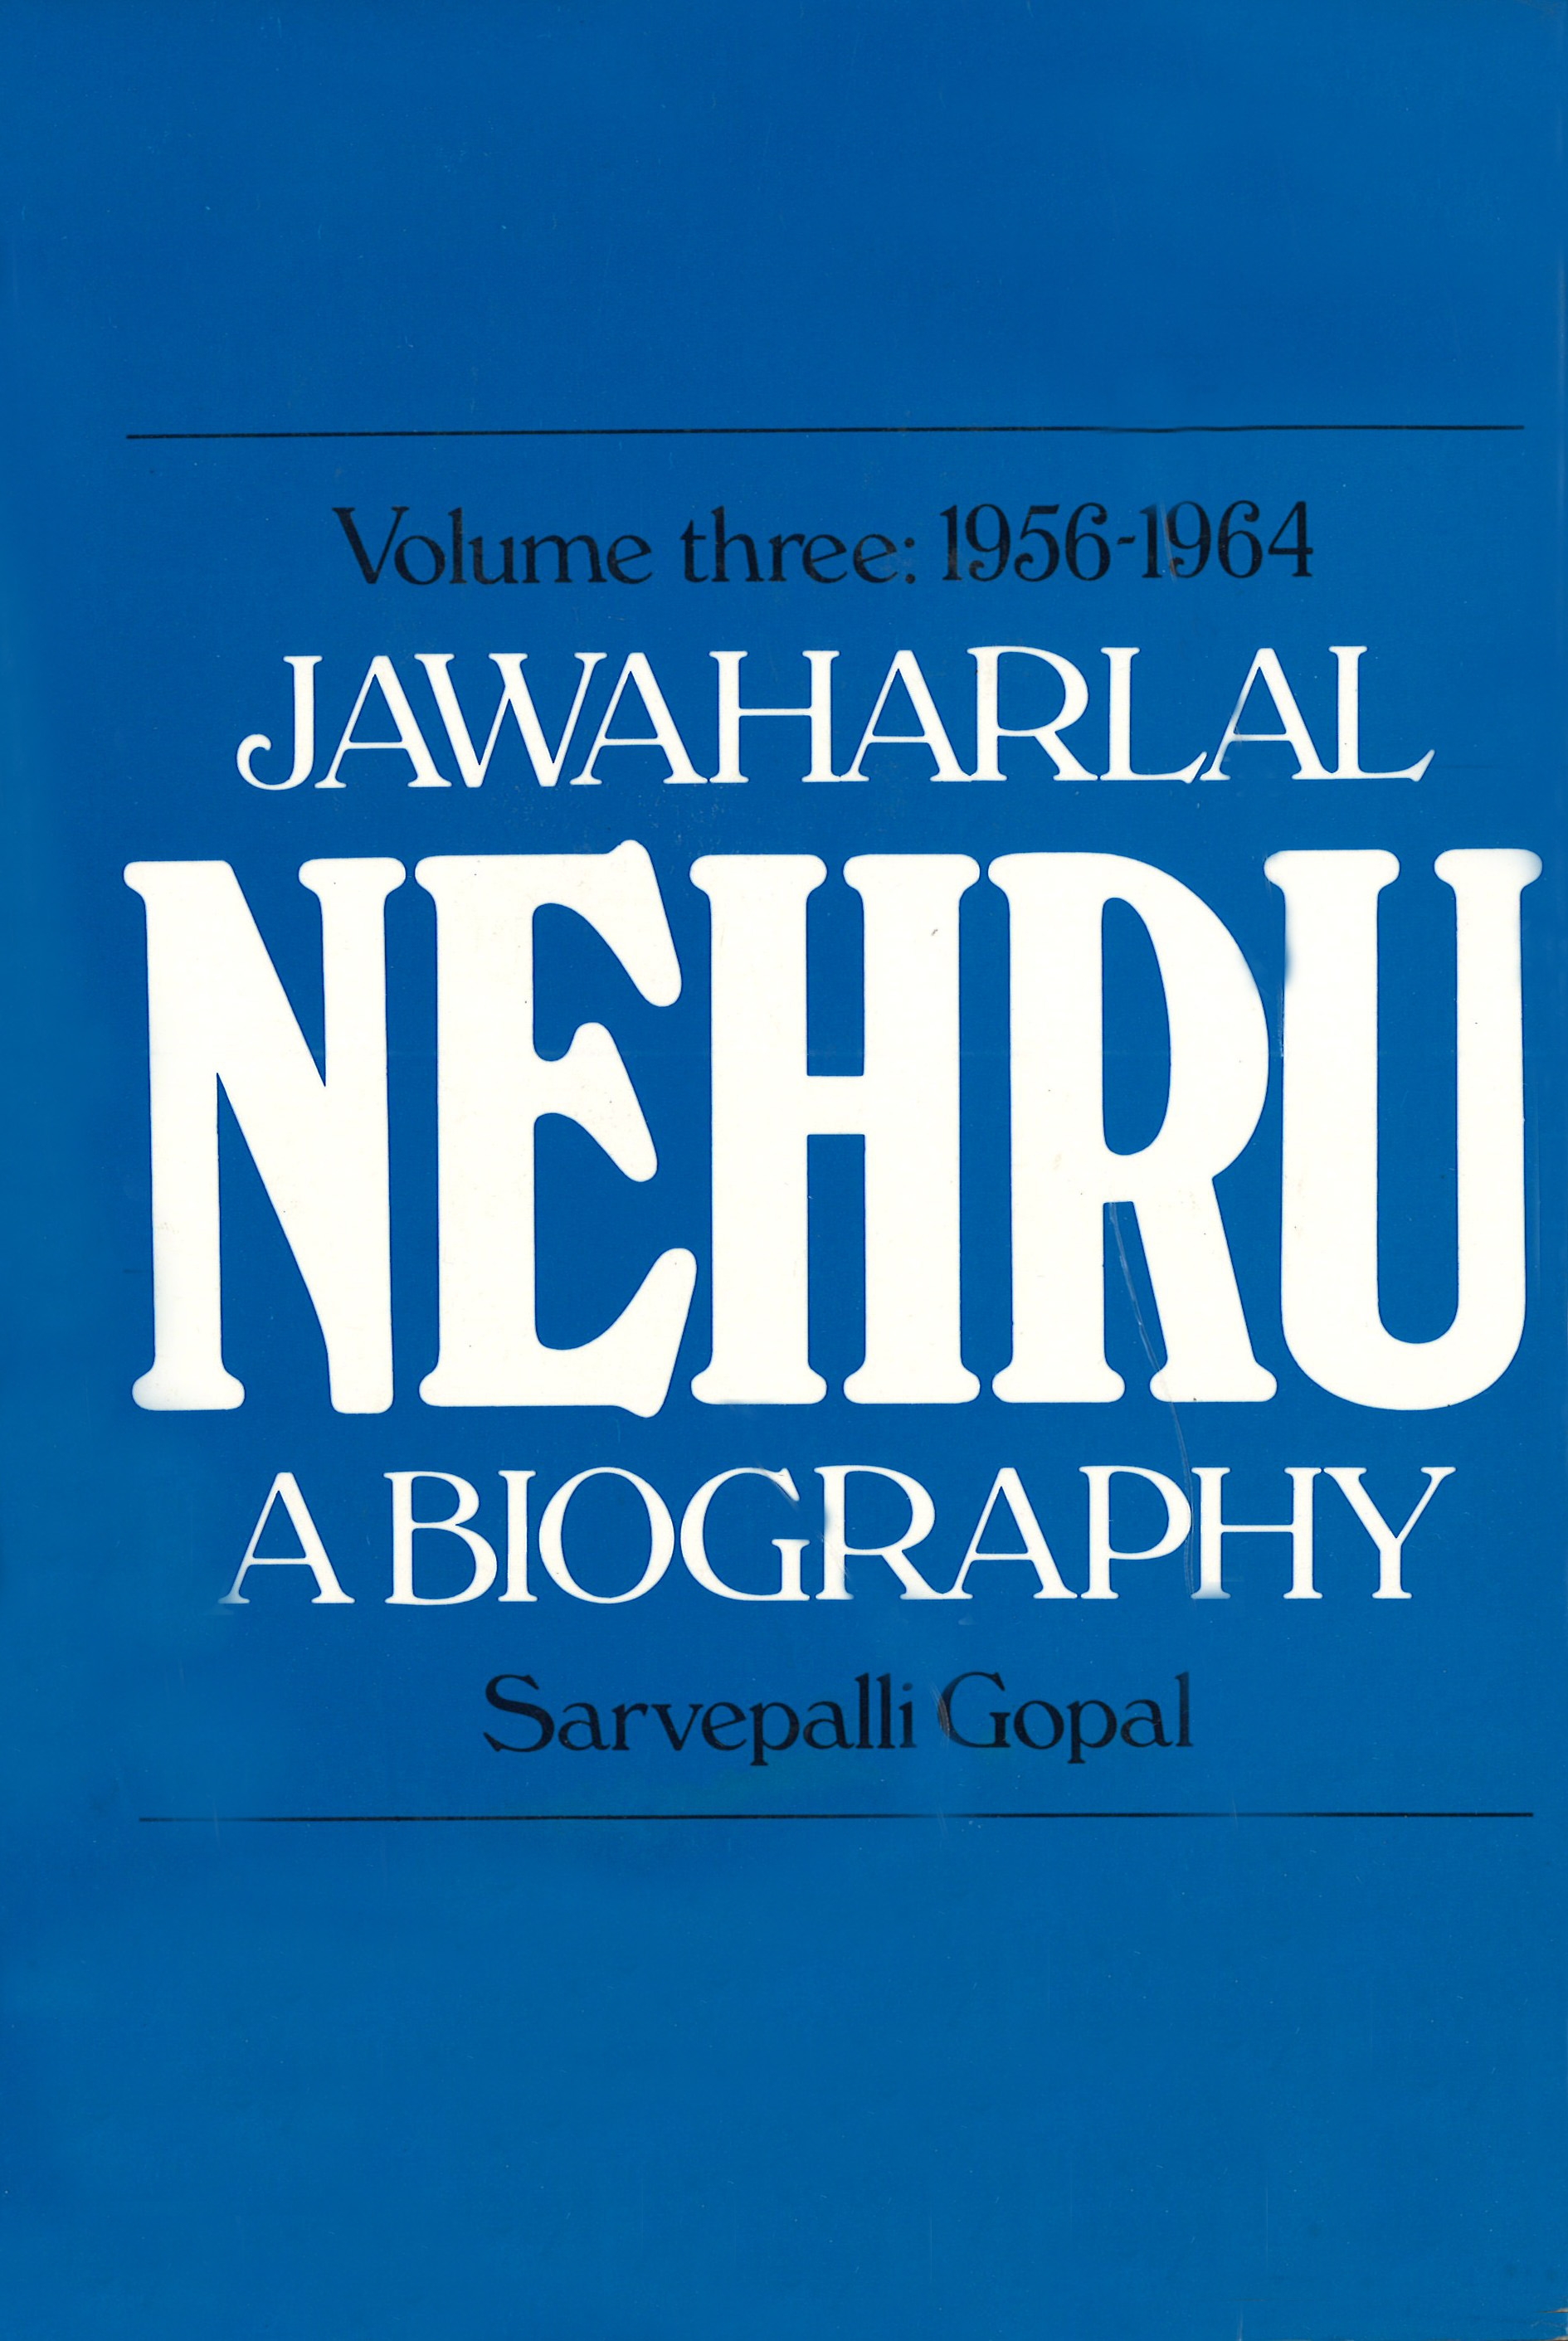 Nehru by Walter Crocker